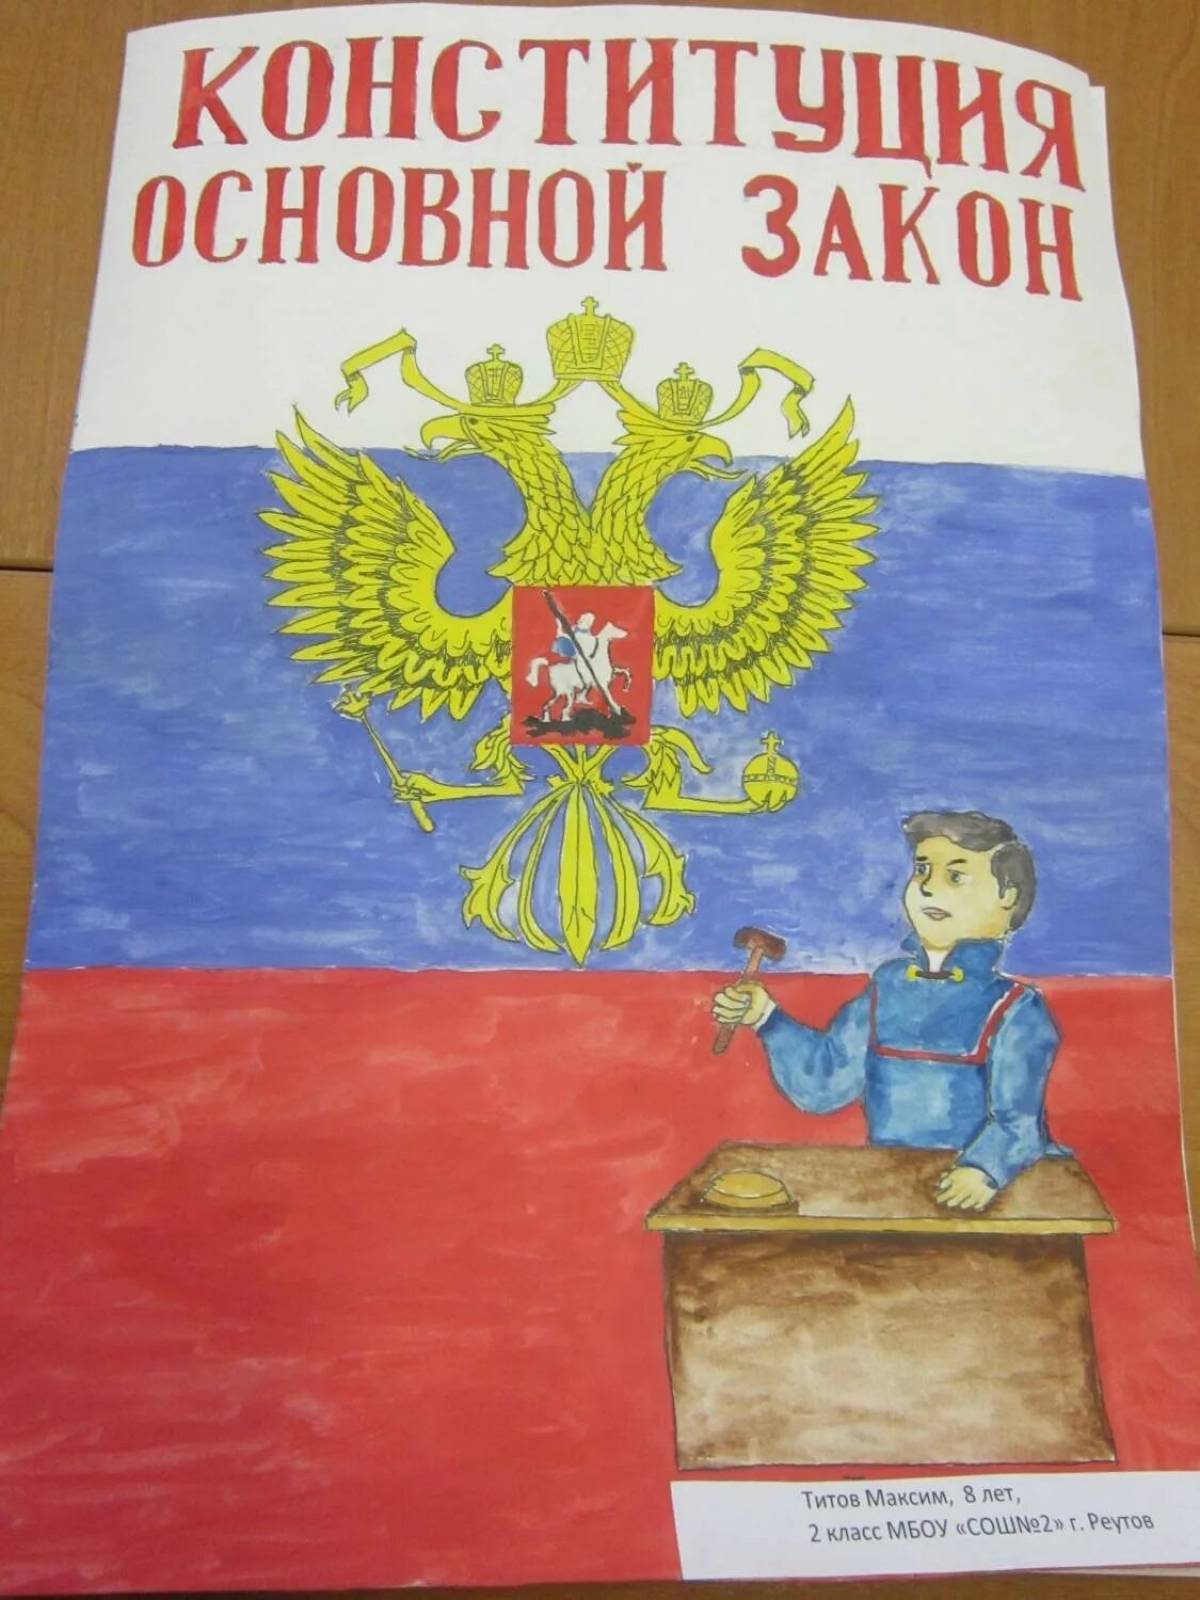 Russian constitution for children #3